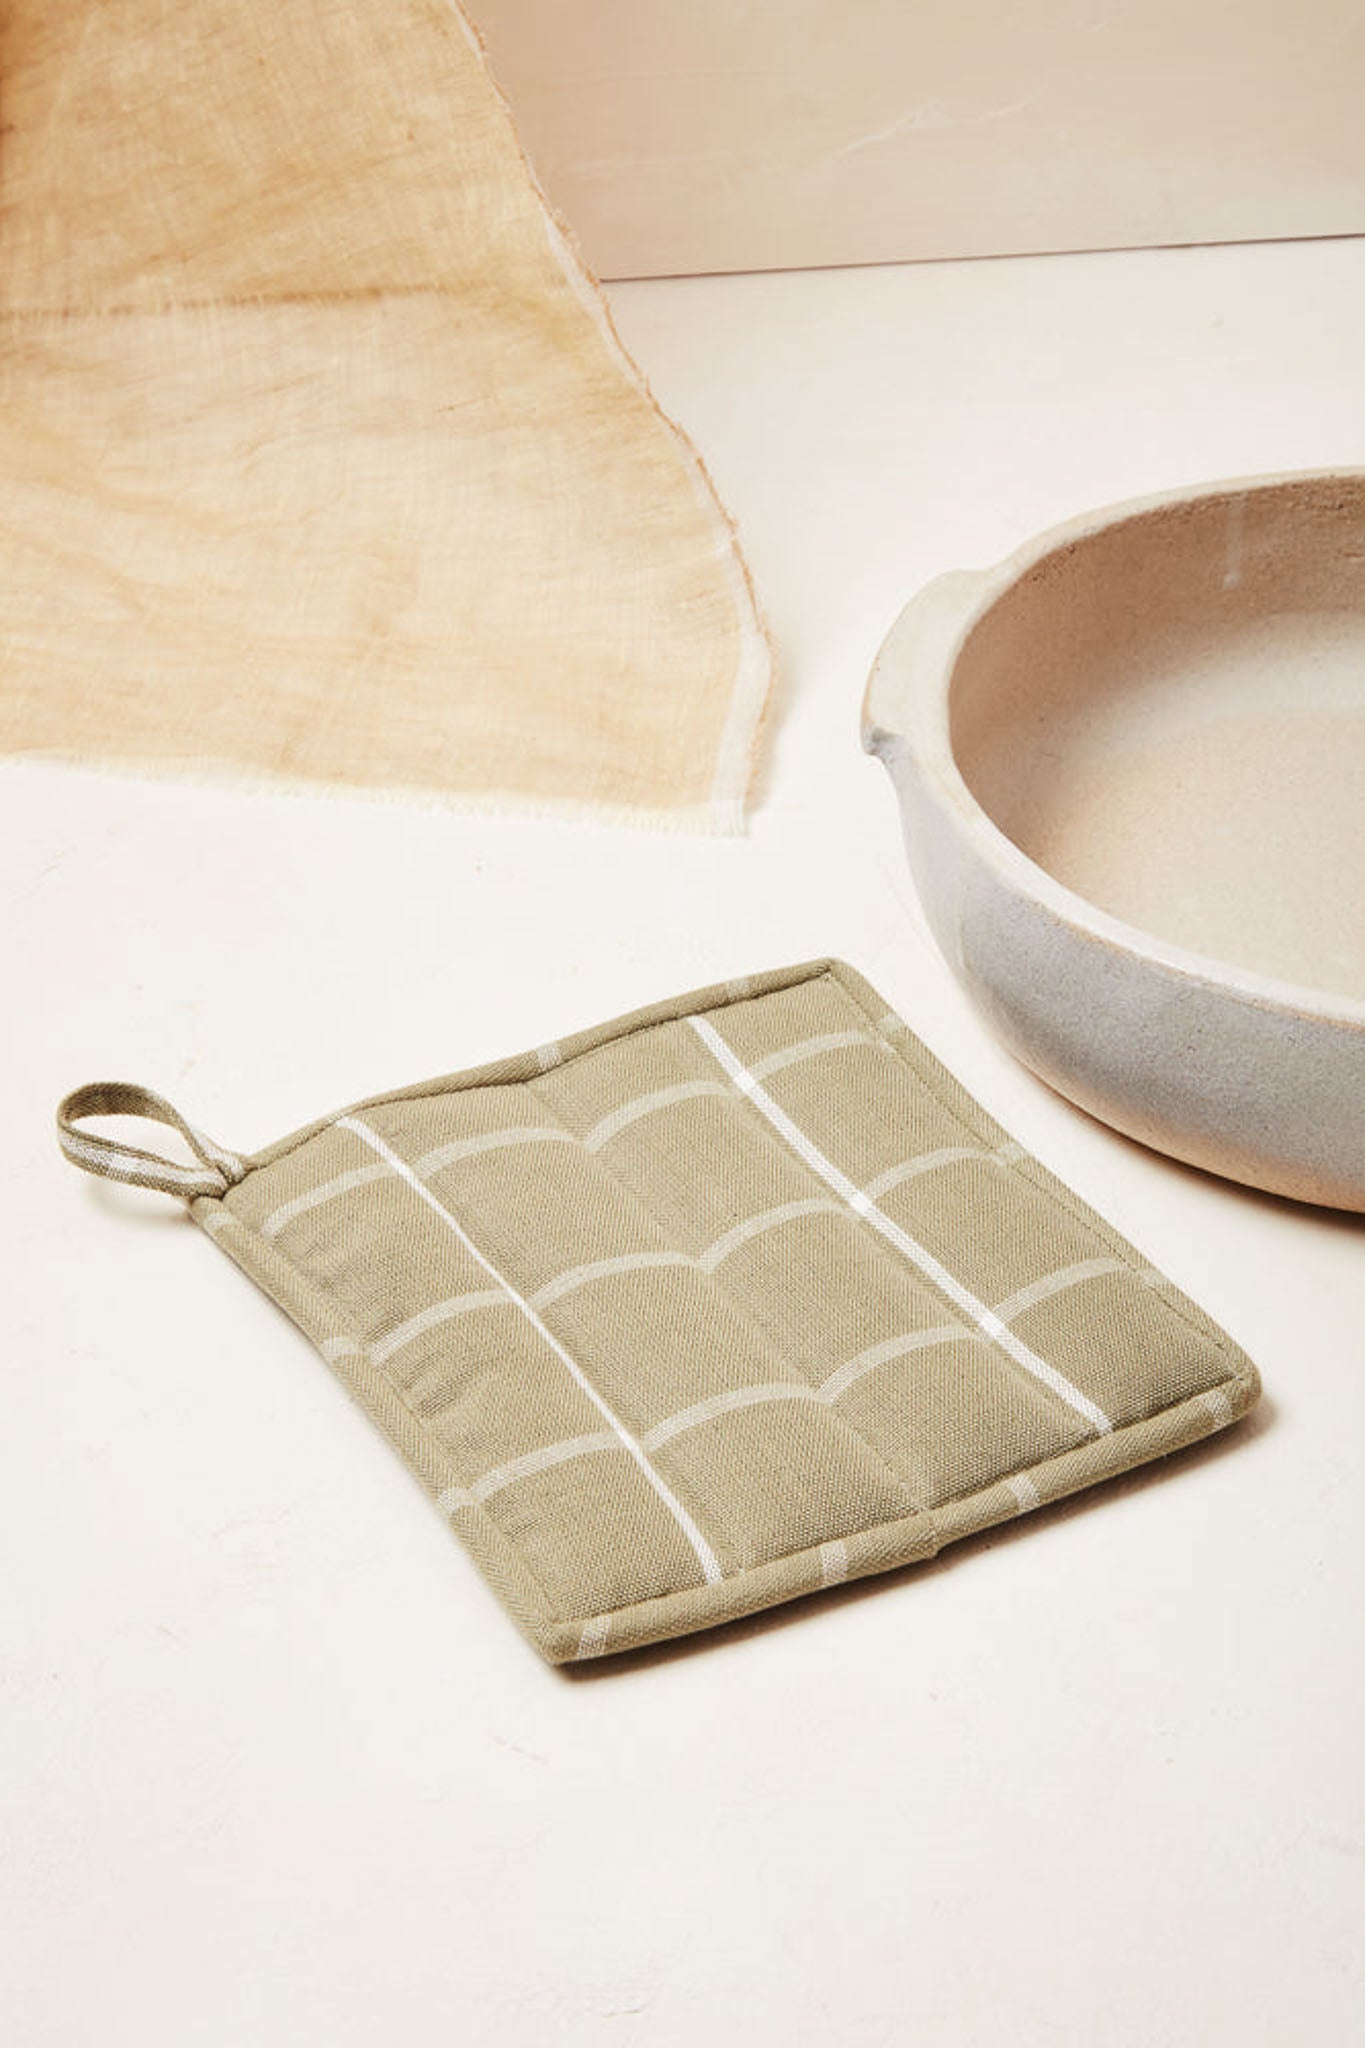 Sol Potholder in Mint - Ethical Kitchen Textiles